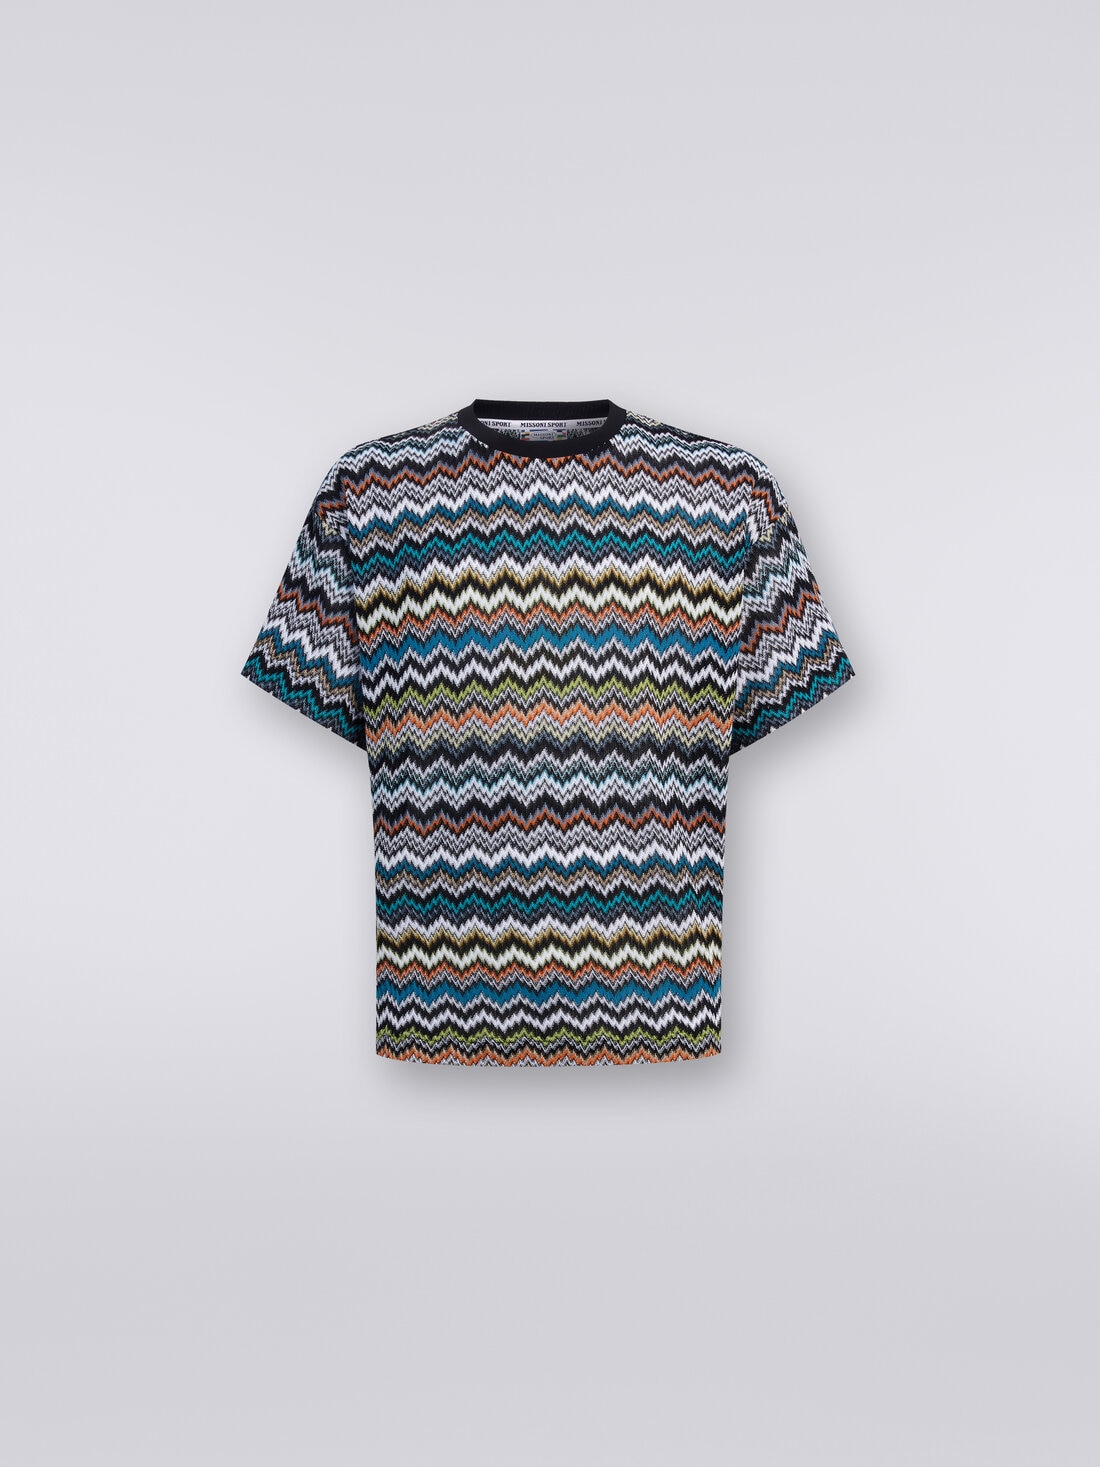 Crew-neck T-shirt in zigzag cotton knit, Multicoloured  - TS24SL03BR00UUSM9AX - 0